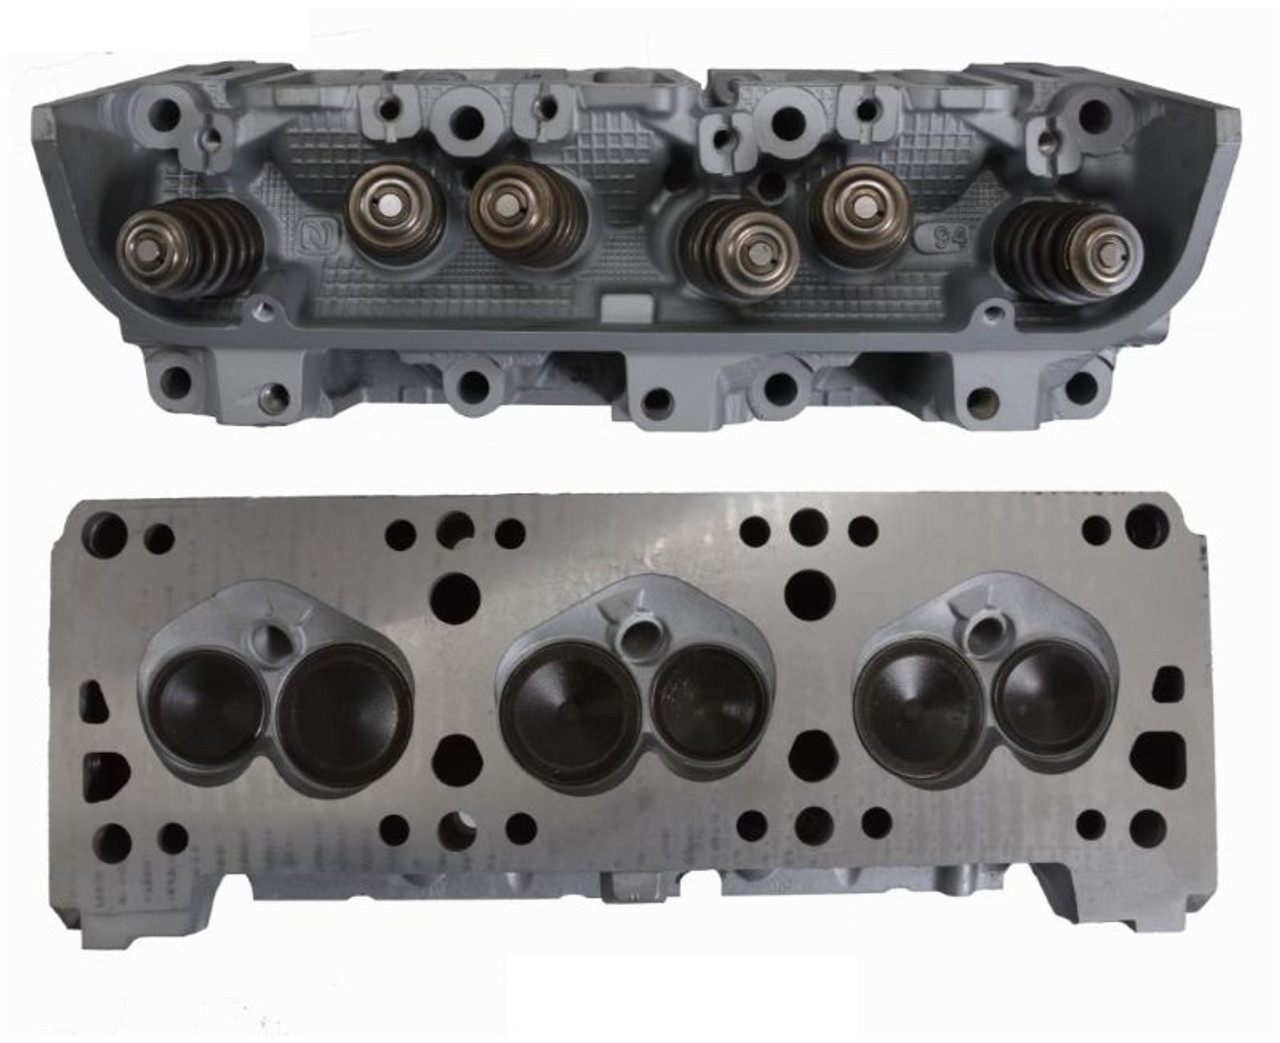 2009 Pontiac Torrent 3.4L Engine Cylinder Head Assembly CH1057R -13